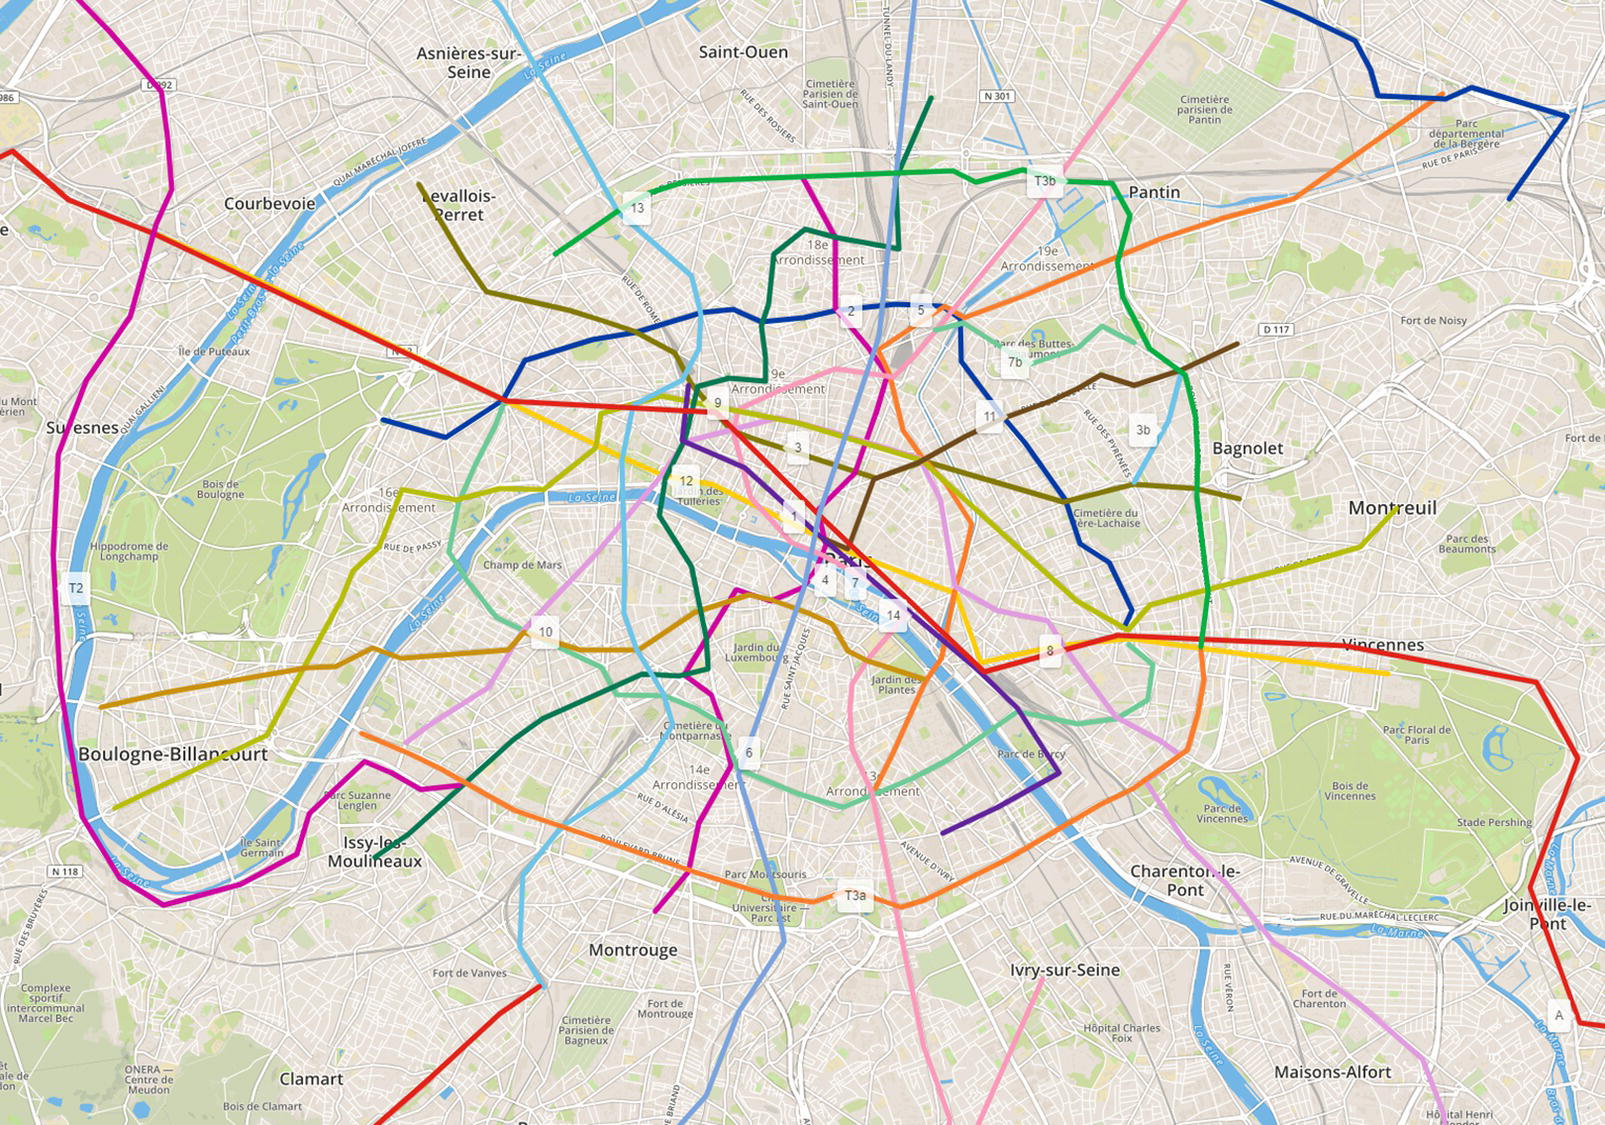 Schematic illustration of transportation network.